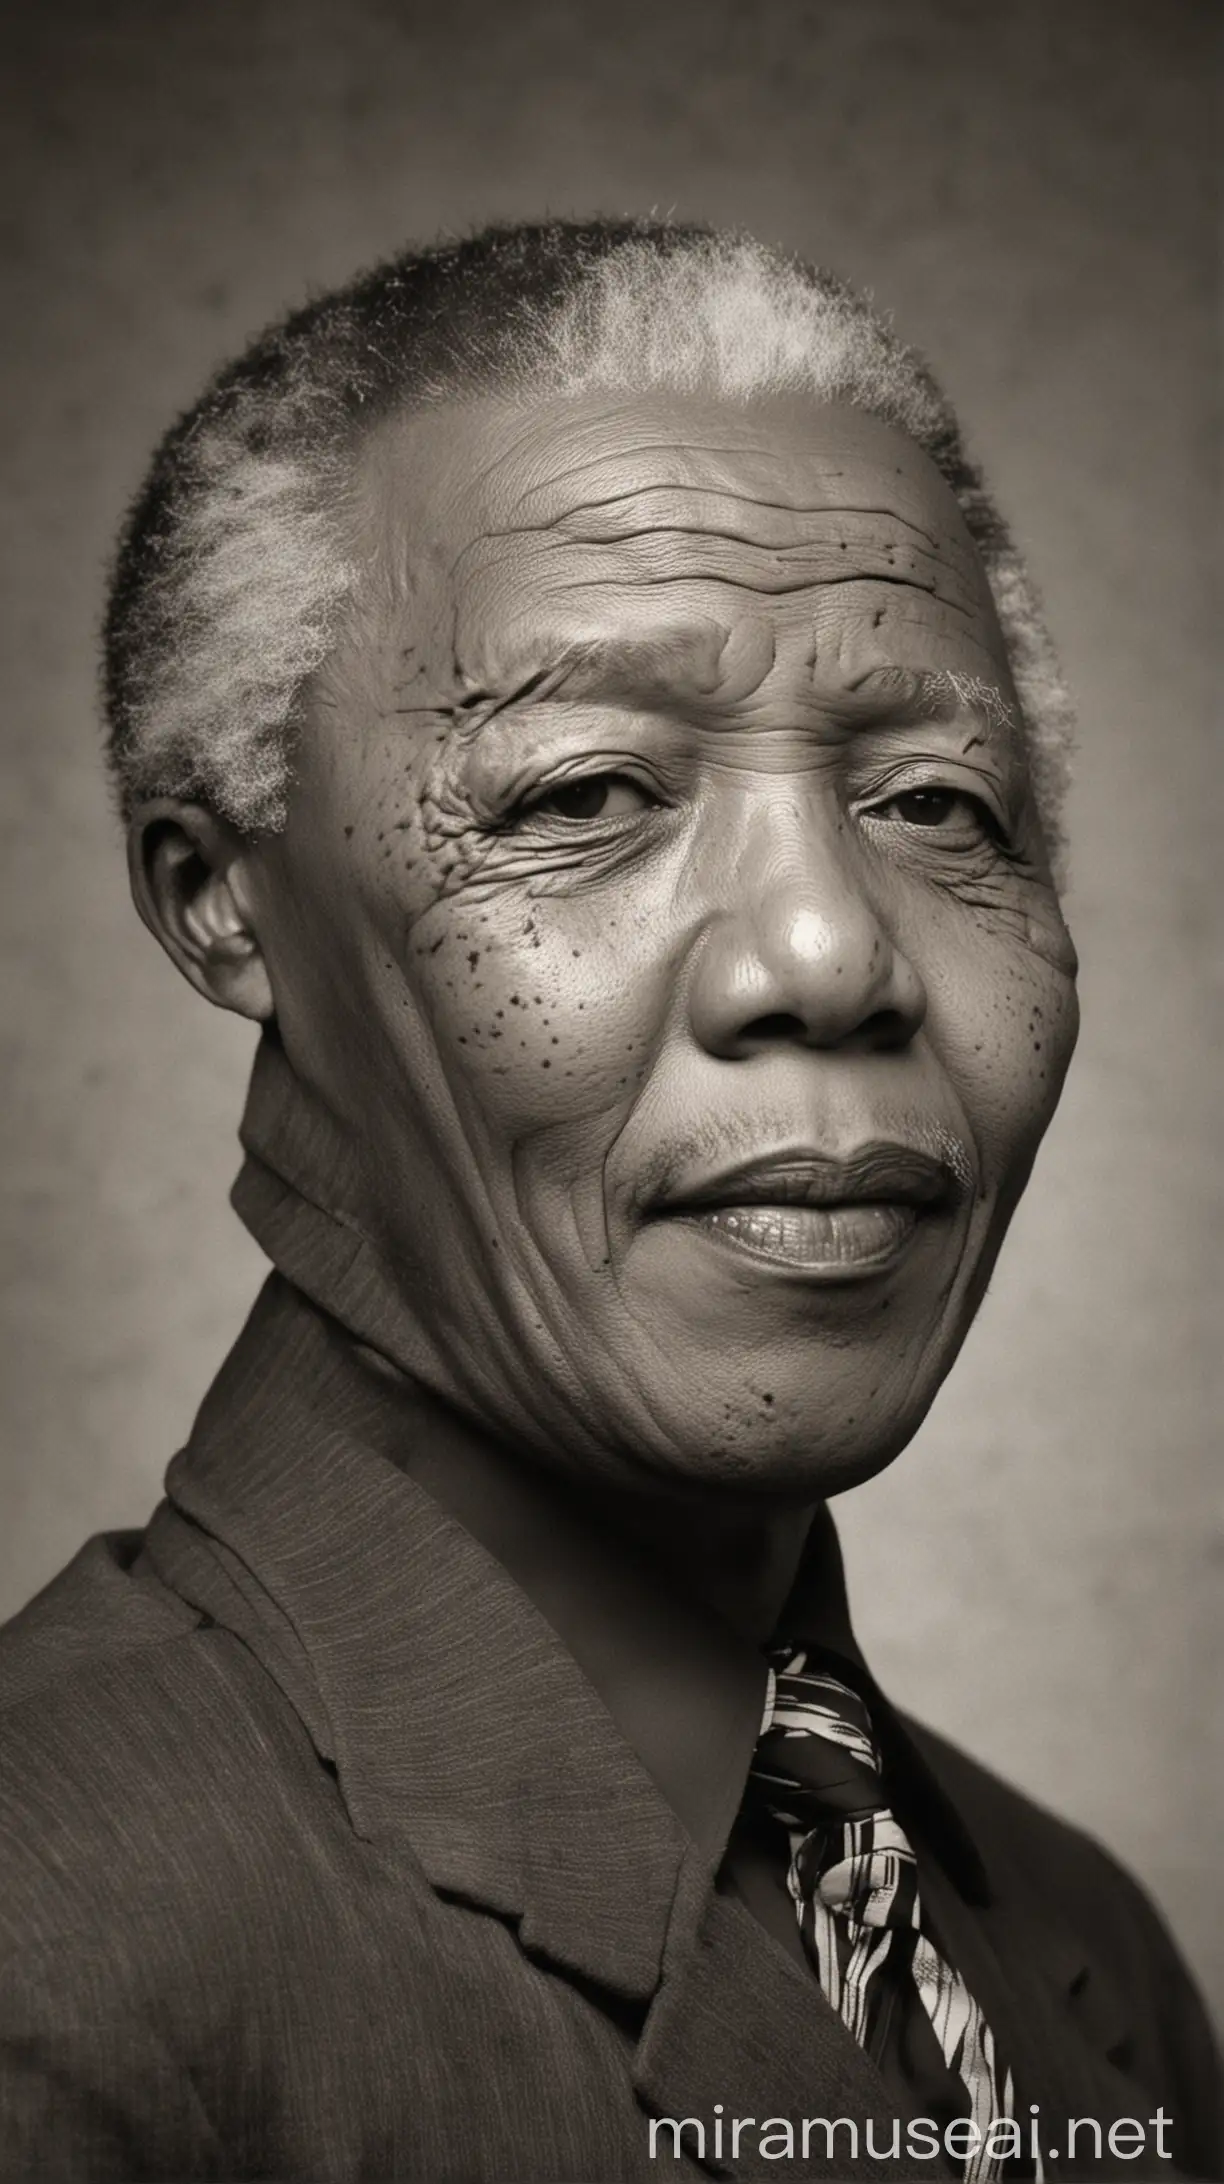 Nelson Mandela Portrait Iconic Leader Inspiring Hope and Change